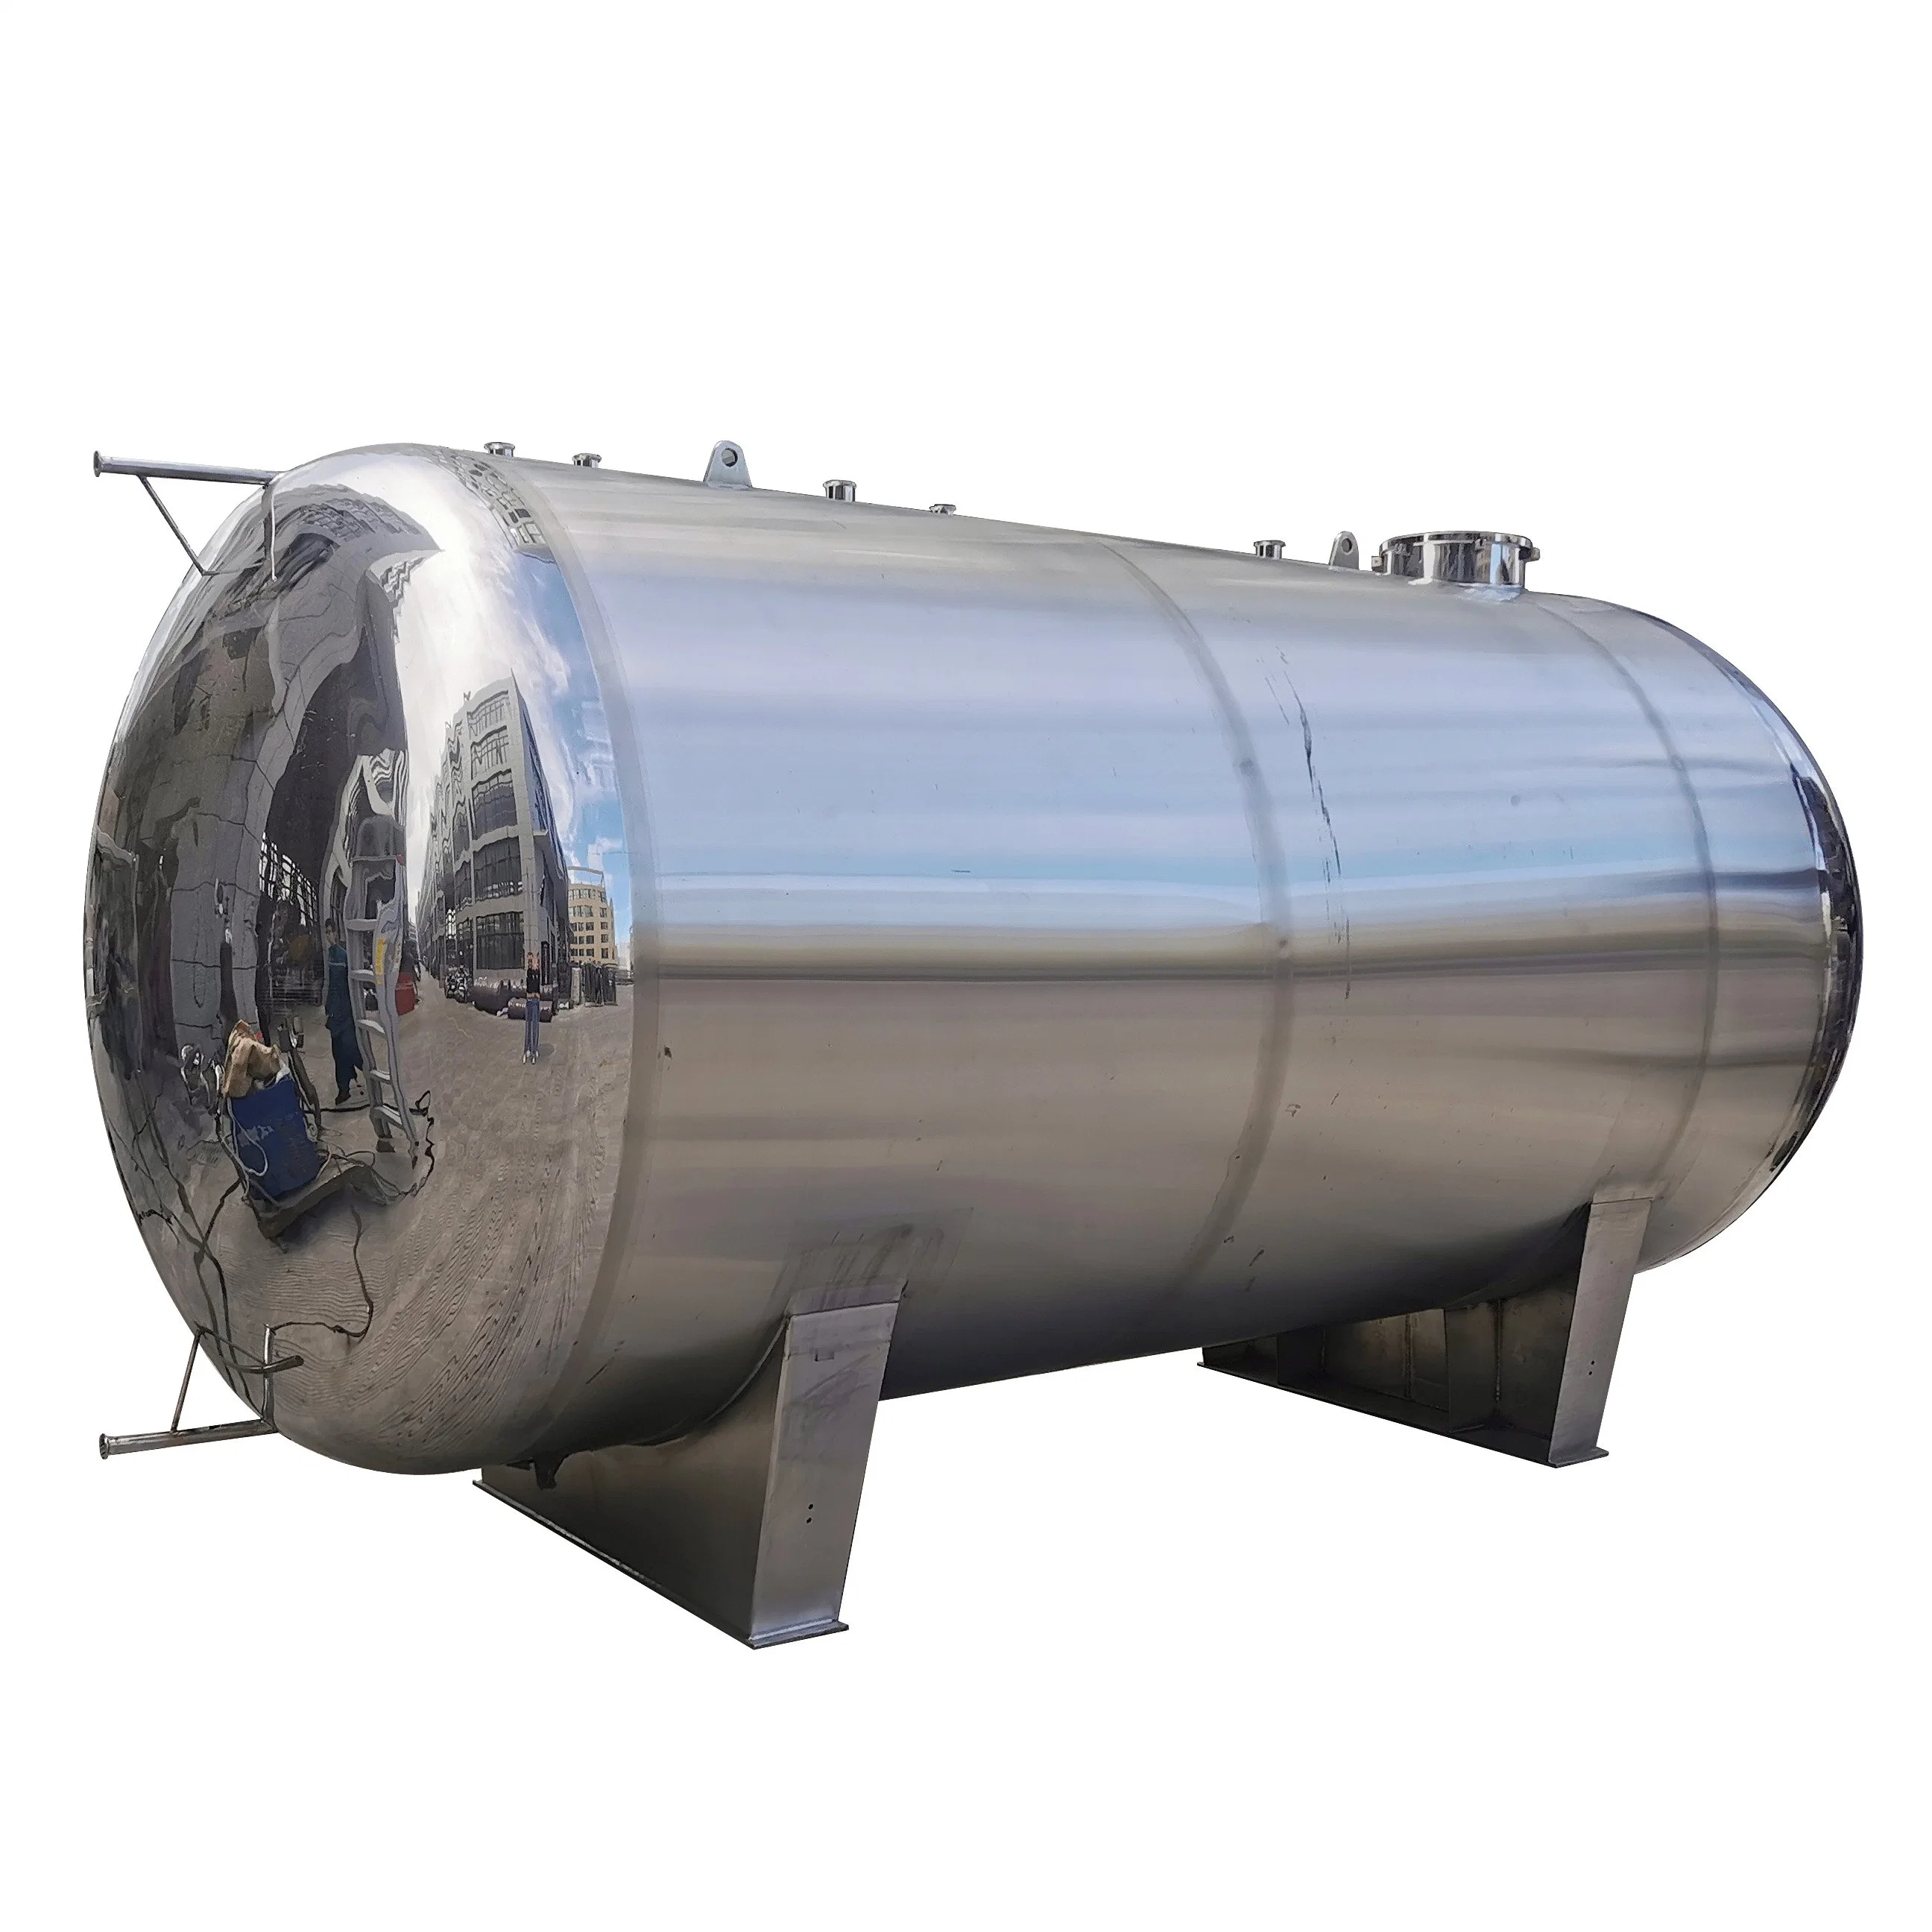 Réservoir de stockage en acier inoxydable 200 litres Réservoir de stockage d'eau 20000 litres Réservoir en acier inoxydable